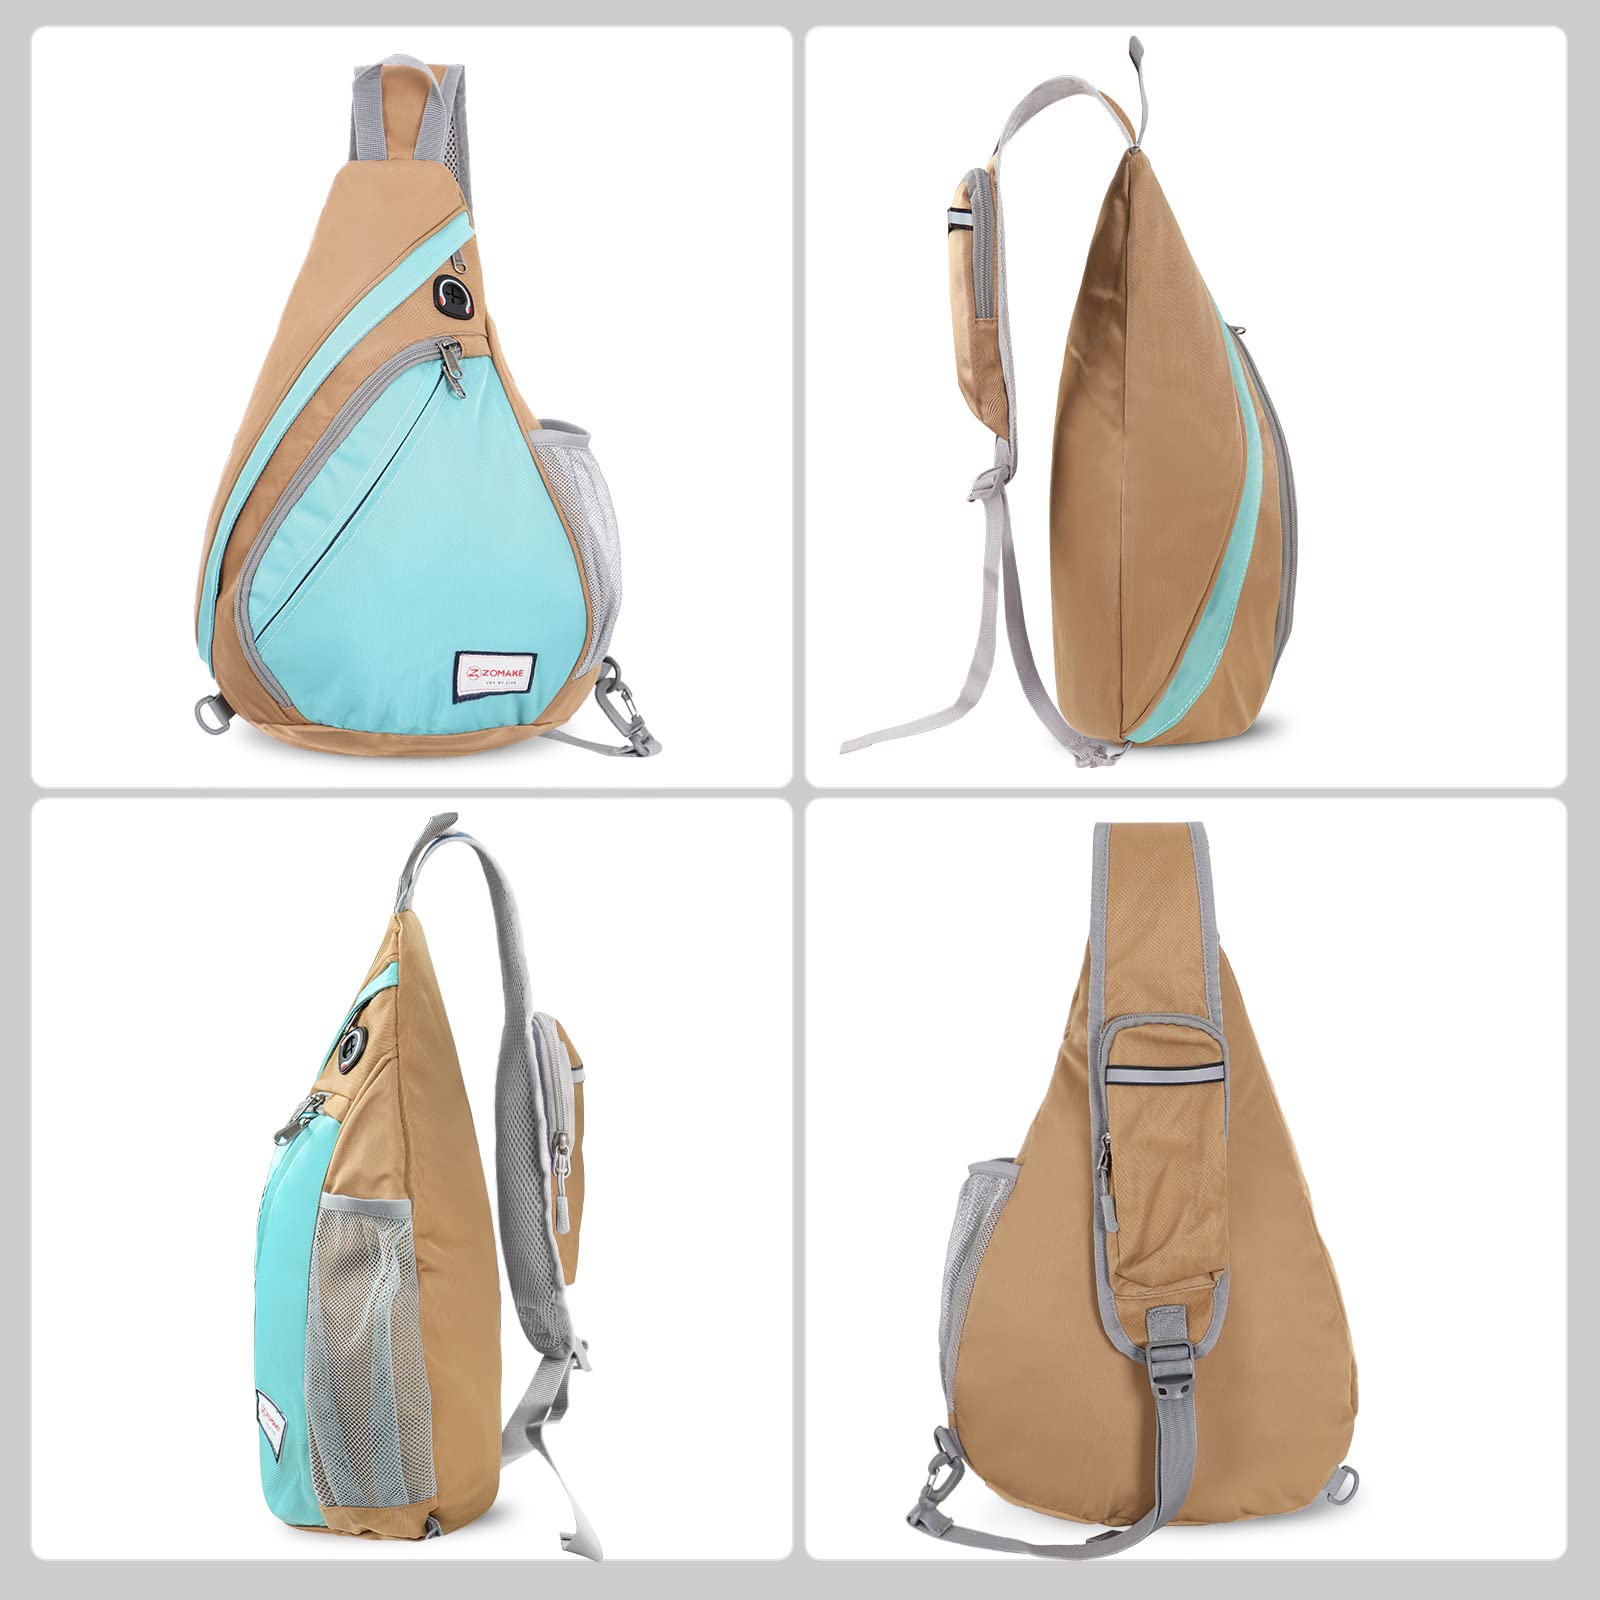 ZOMAKE Sling Bag for Women Men:Small Crossbody Sling Backpack - Mini Shoulder Bag Anti Thief Chest Bag for Hiking